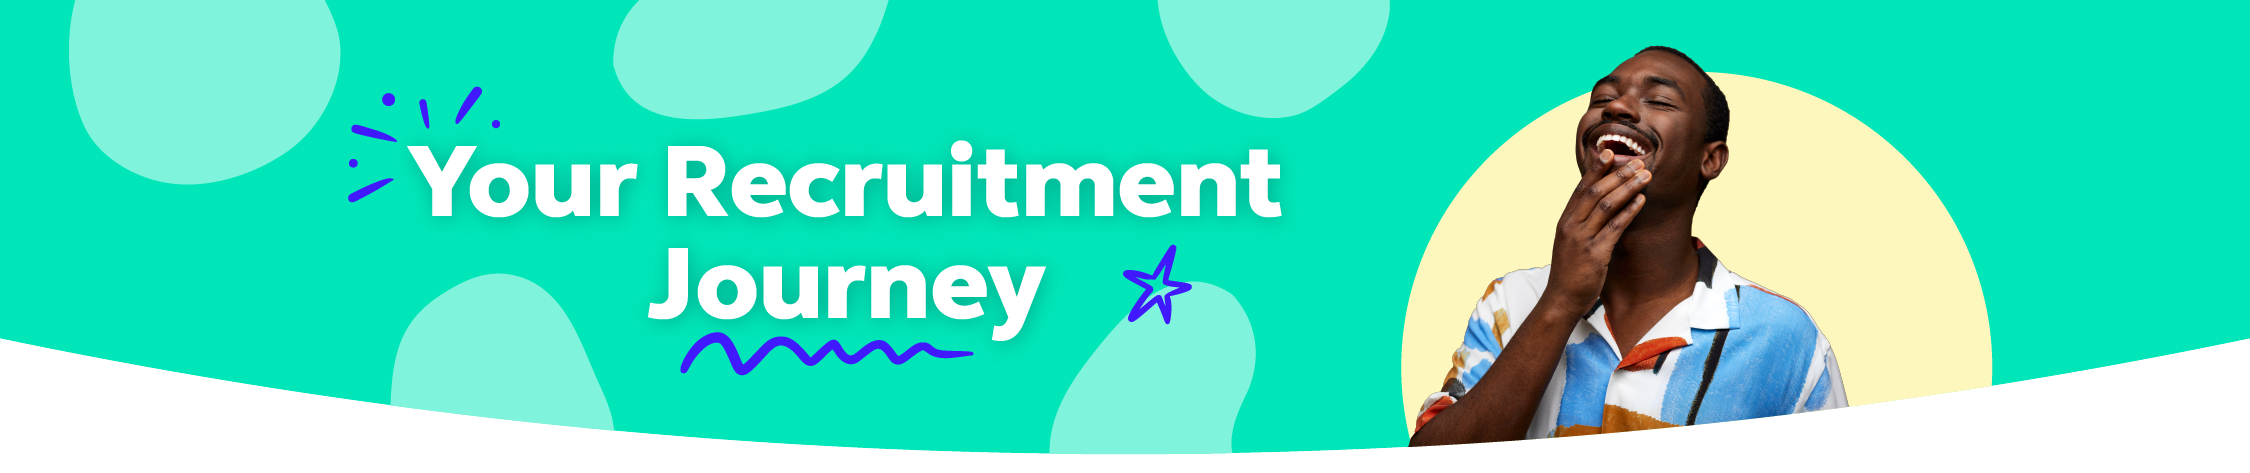 Your Recruitment Journey